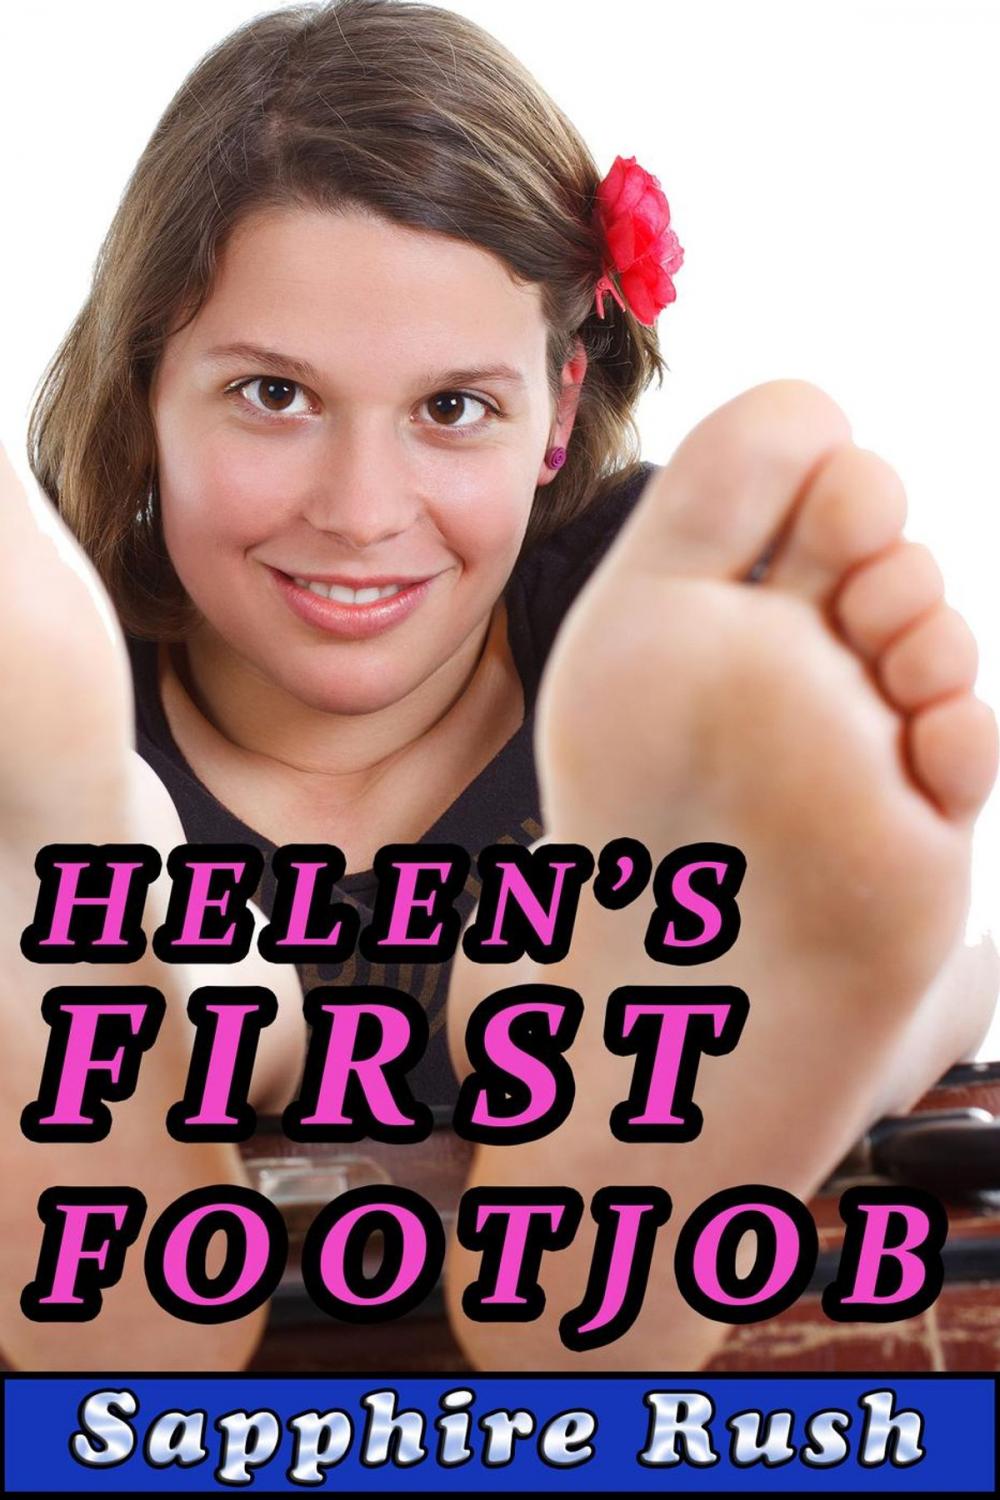 Big bigCover of Helen's First Footjob (public foot fetish sex)